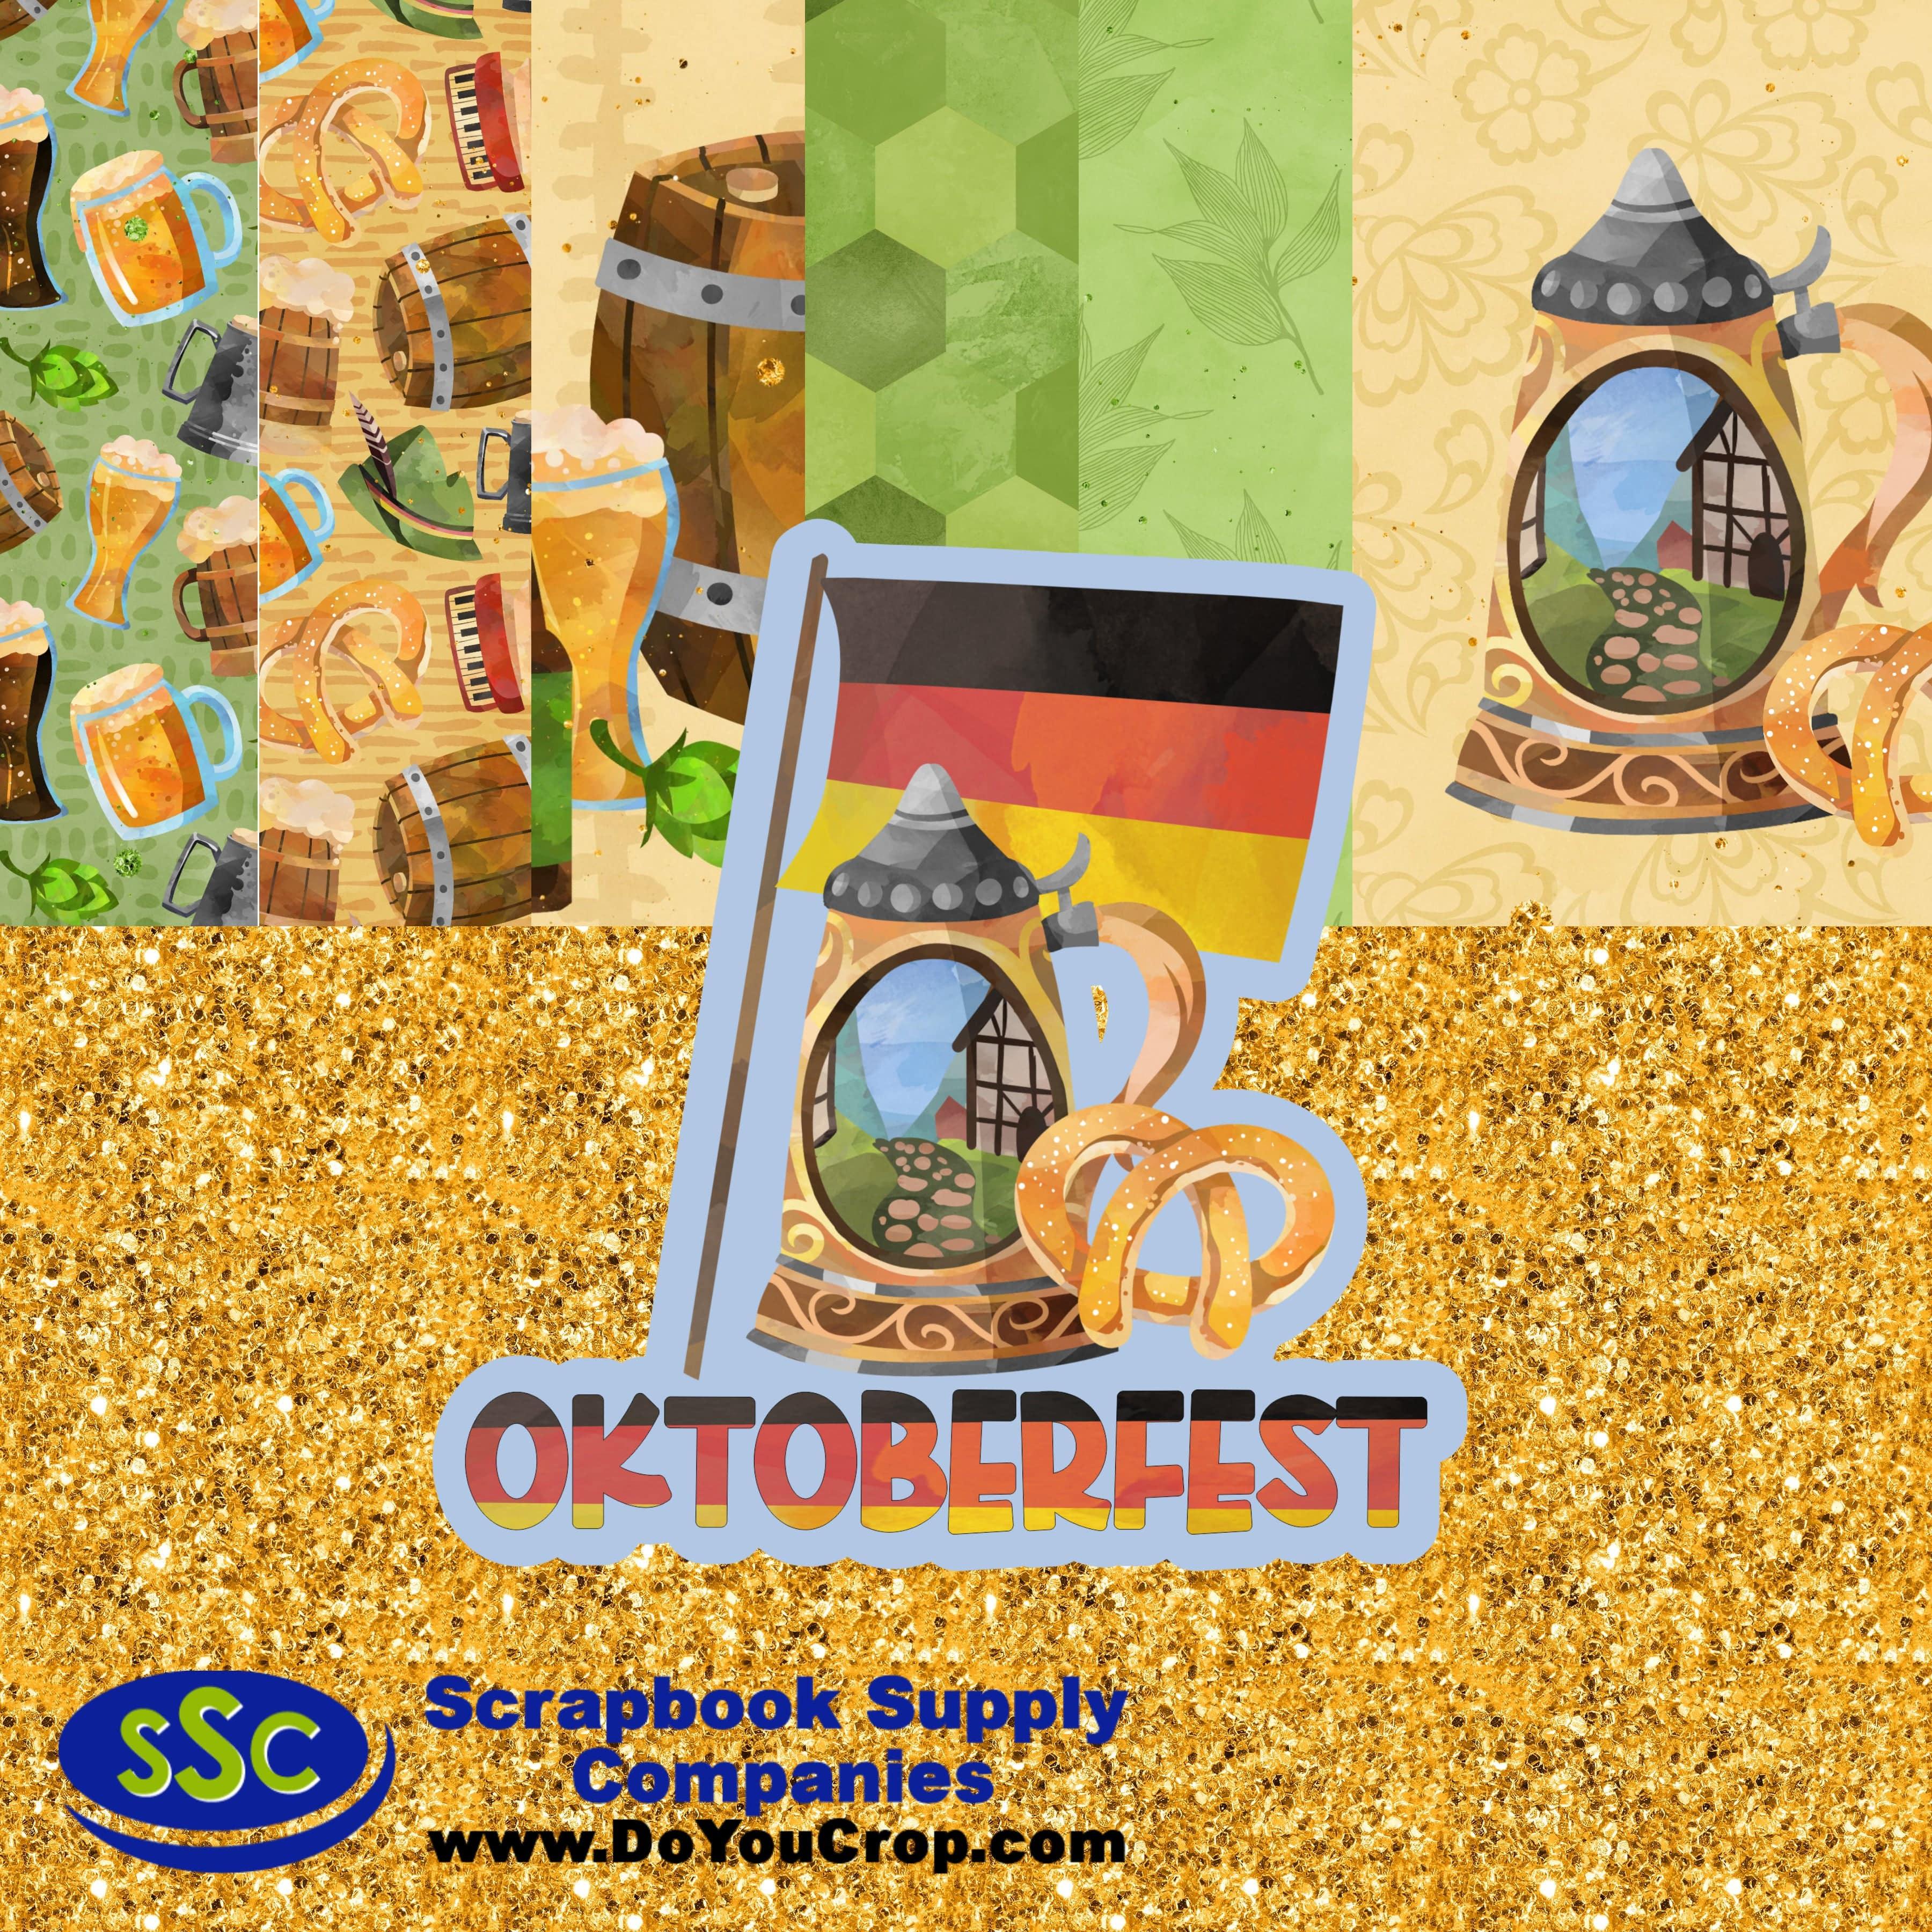 PhantasiaDesign's Oktoberfest 12 x 12 Scrapbook Paper & Embellishment Kit by SSC Designs - Scrapbook Supply Companies